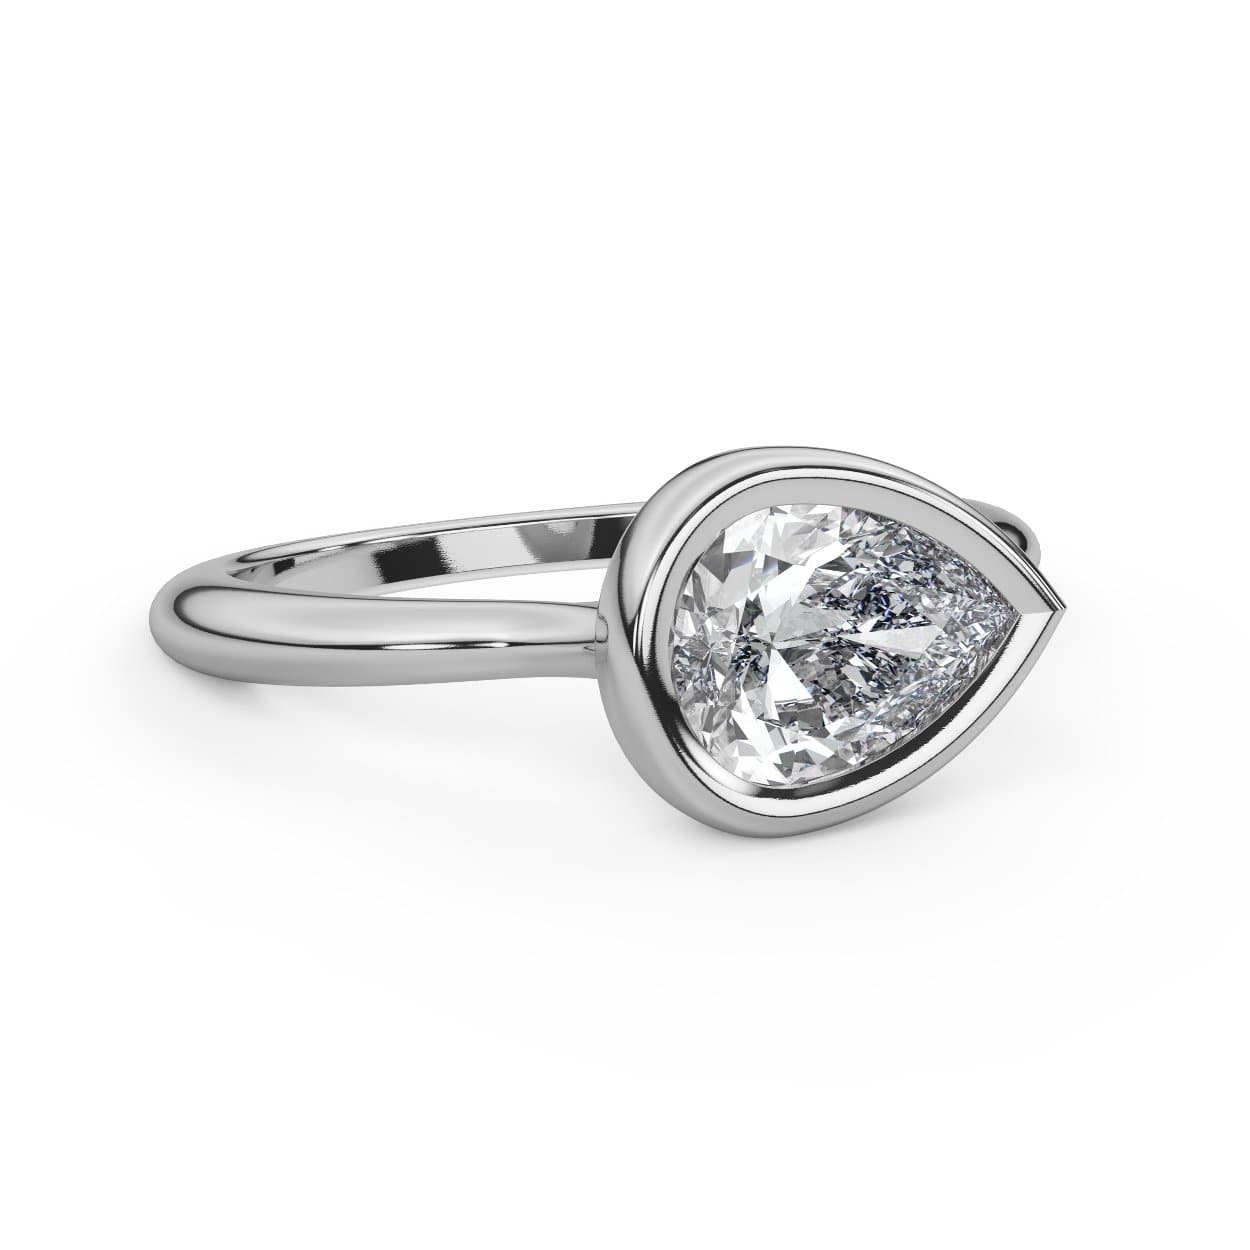 East West Pear Cut Diamond Bezel Engagement Ring